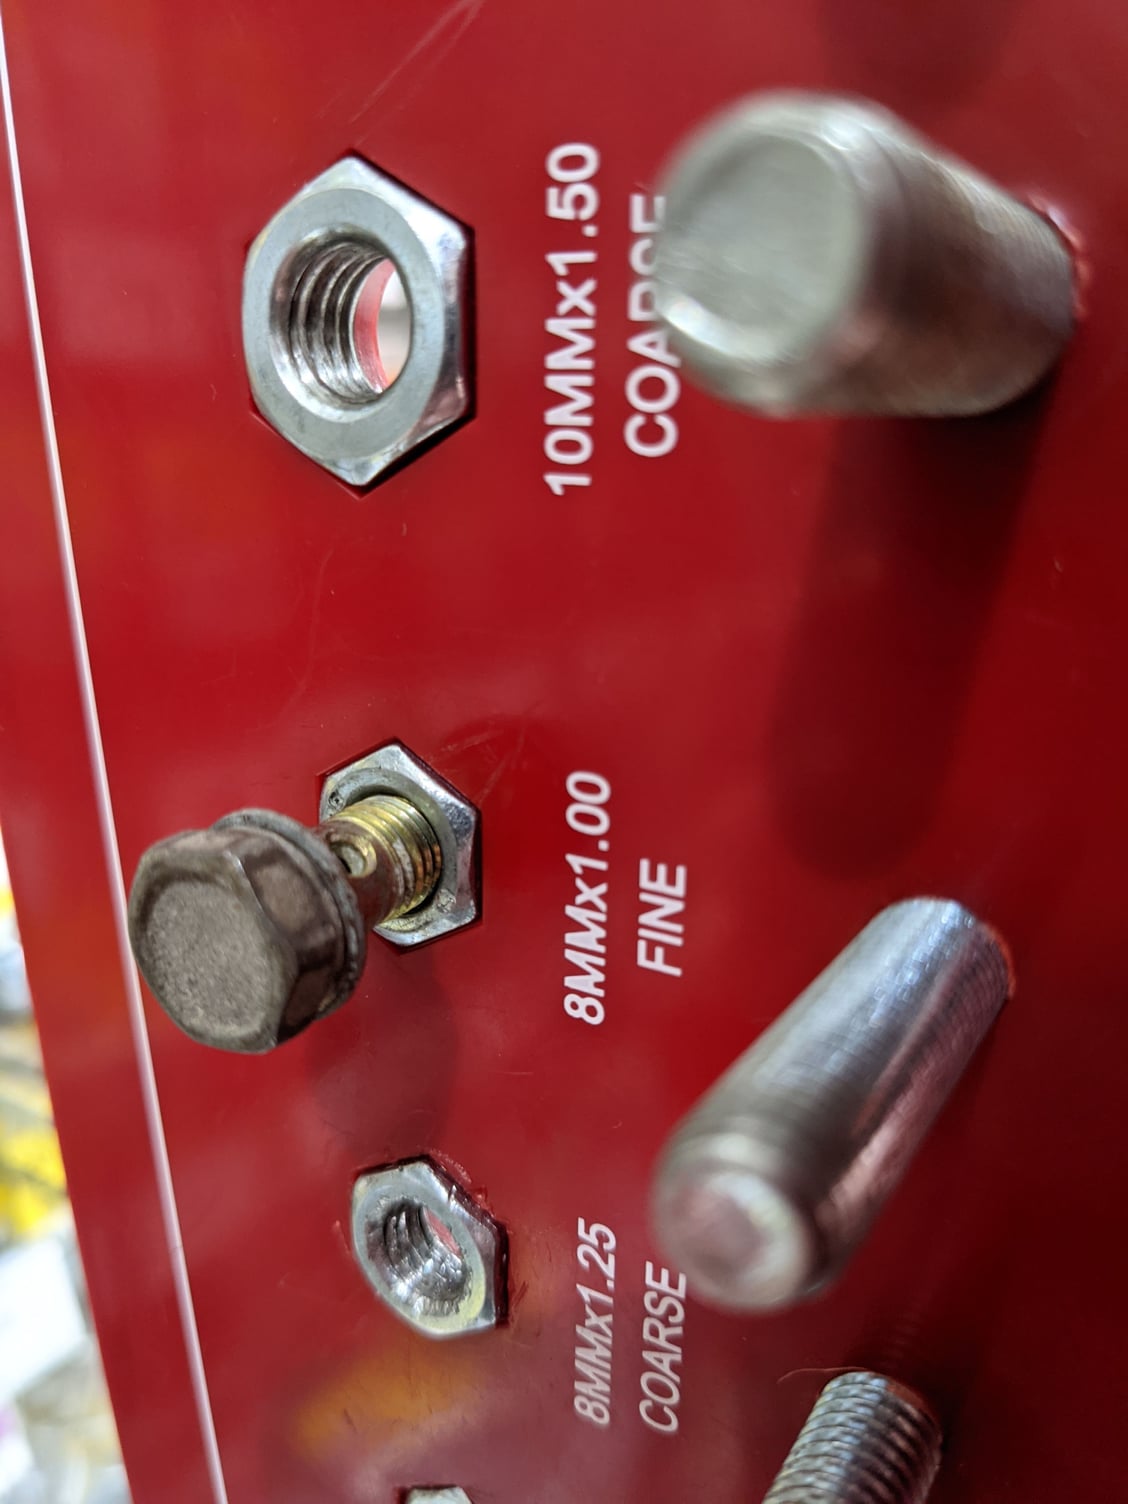 Fuel Pressure Gauge Kit - Pensacola Fuel Injection